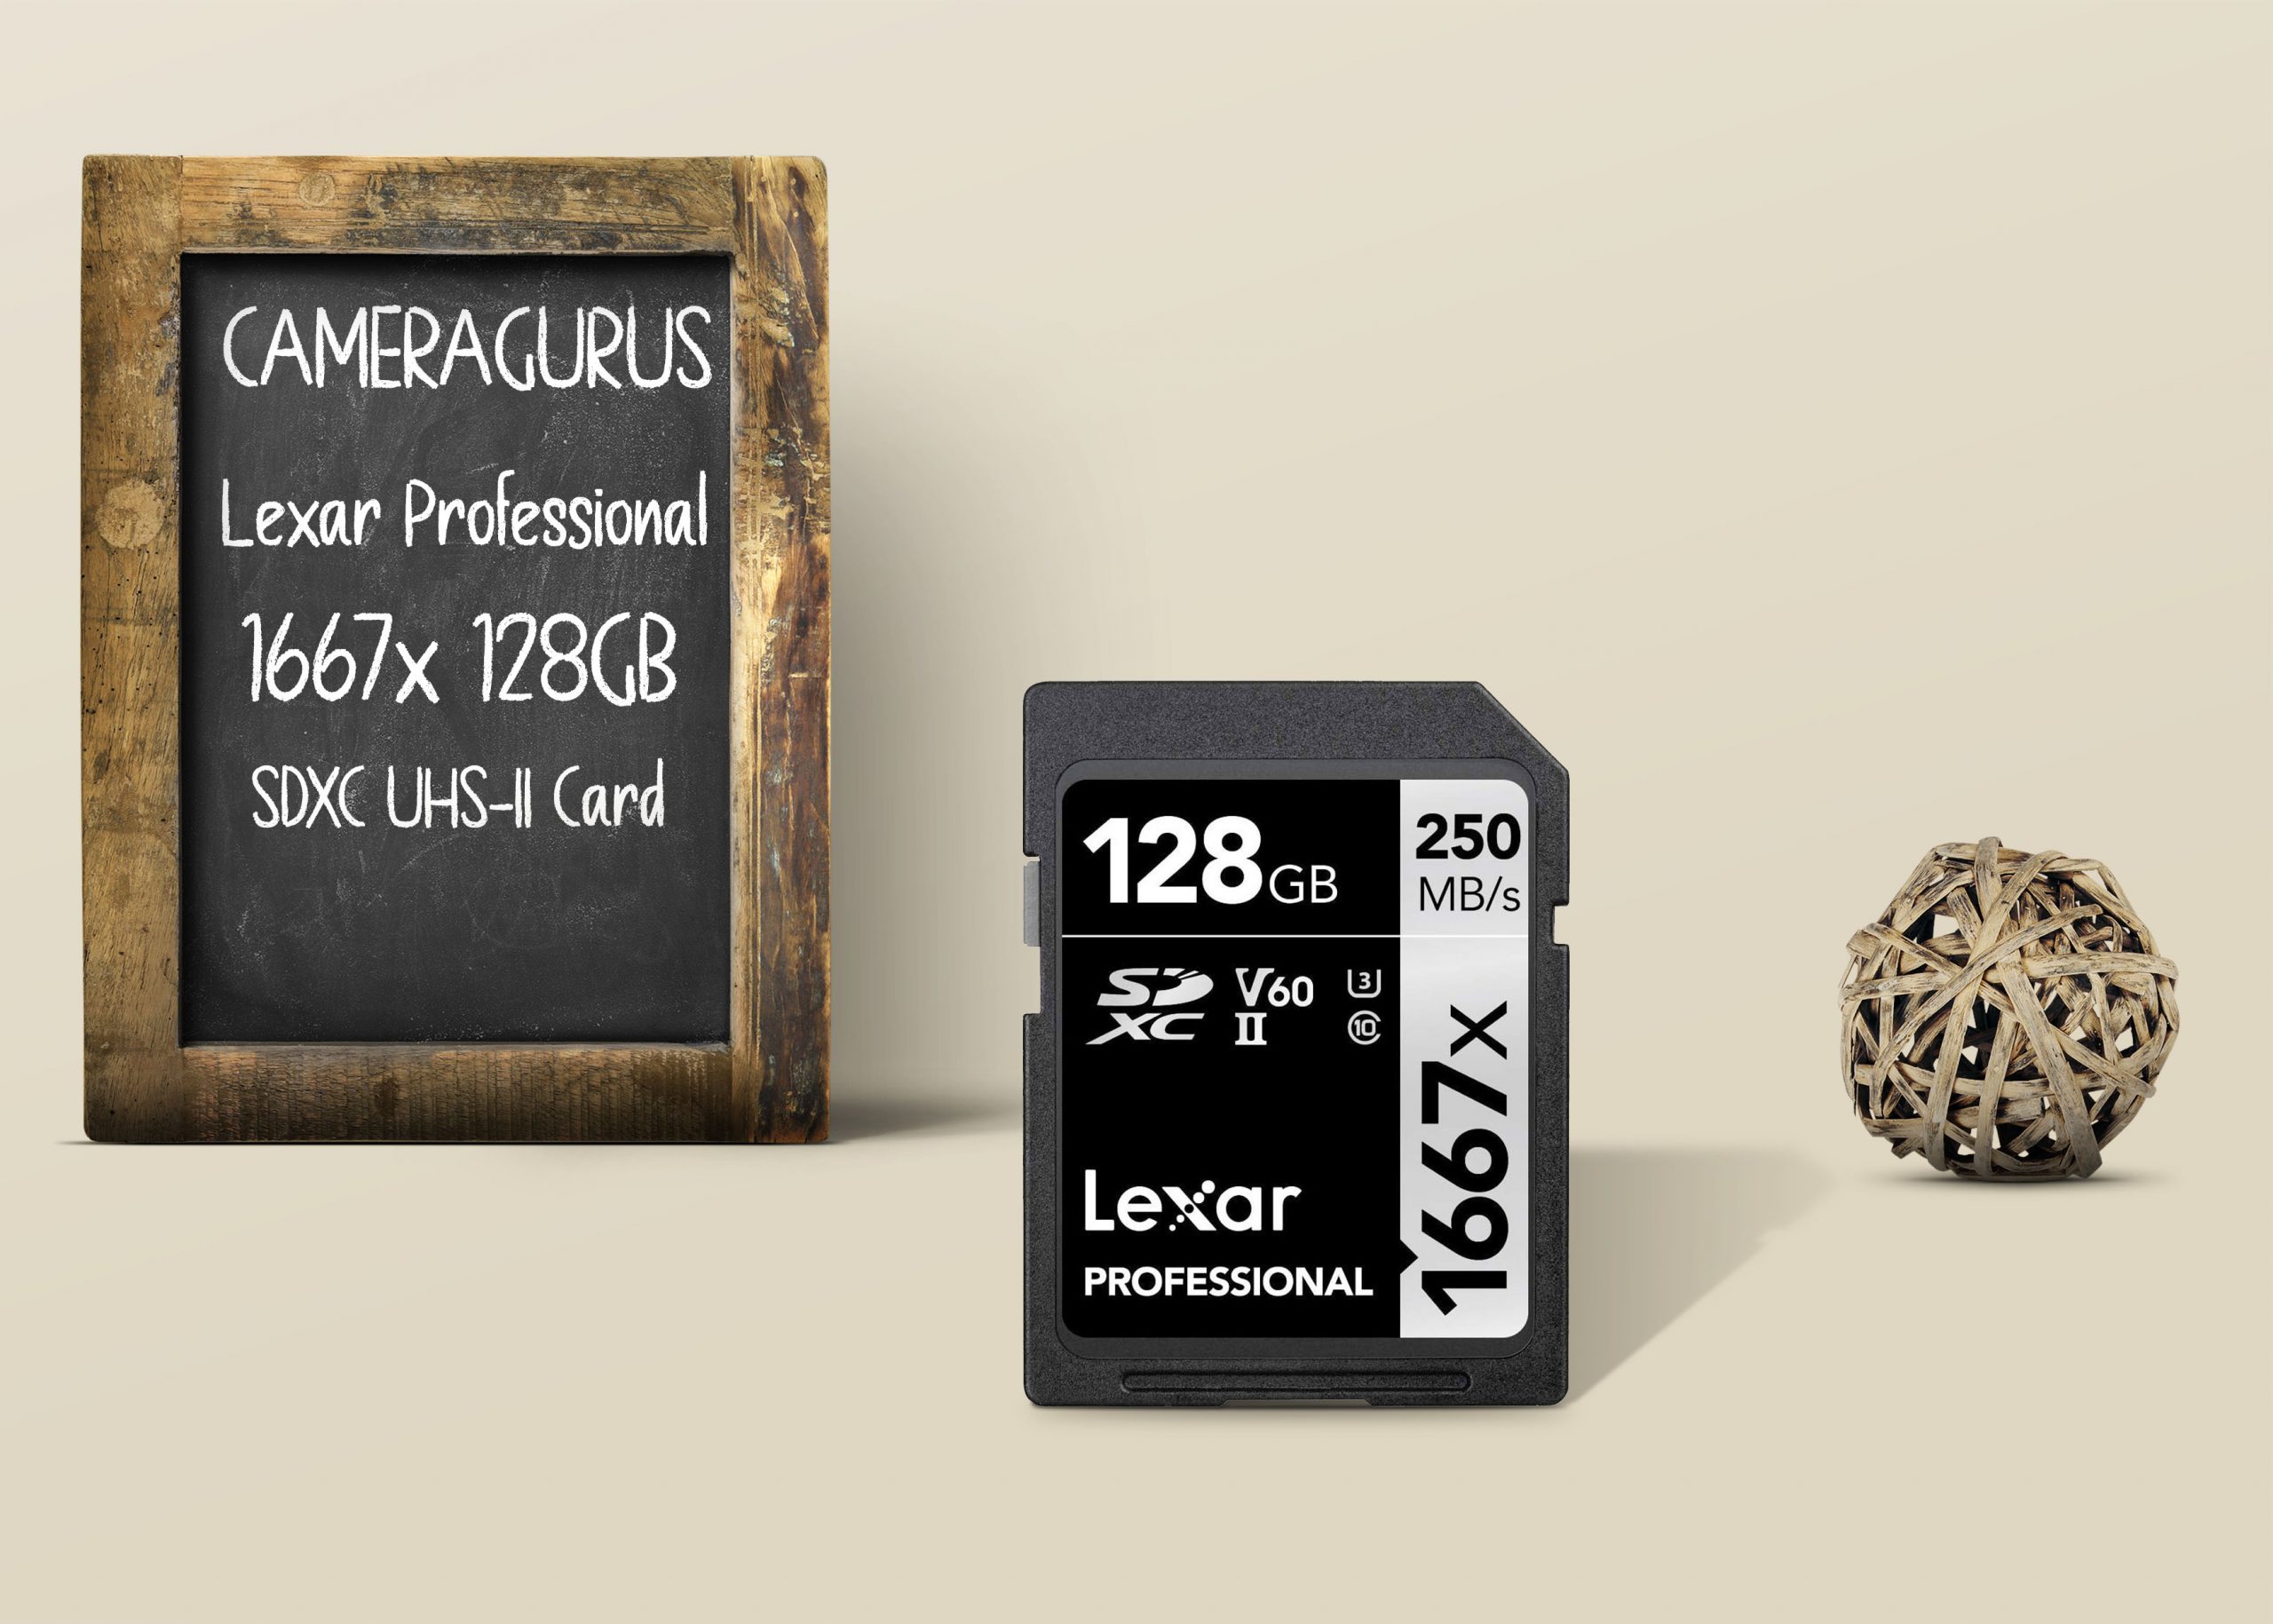 Lexar Professional 1667x 128GB SDXC UHS II Card